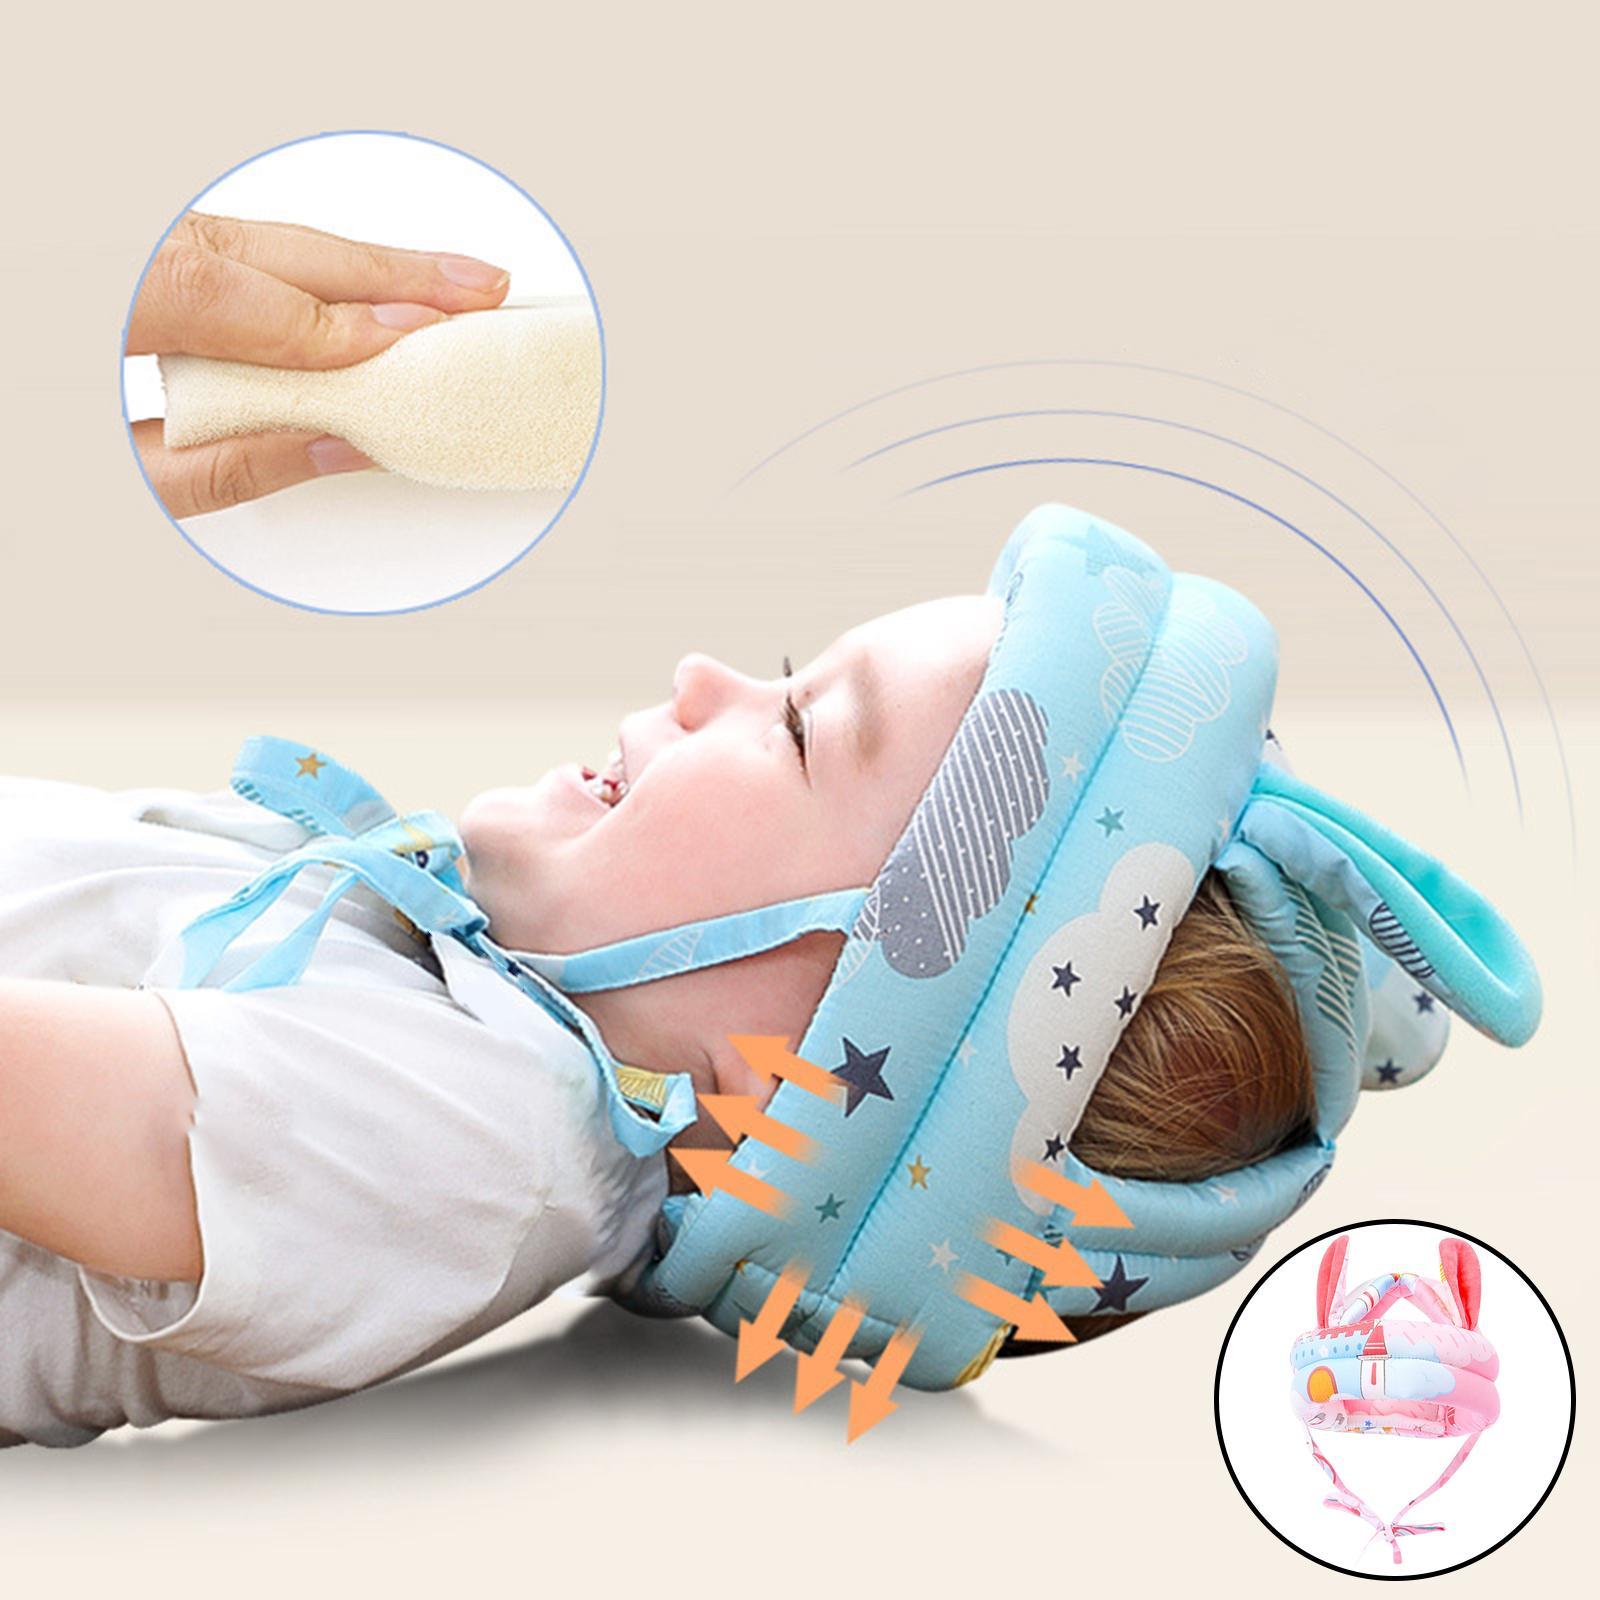 2x Adjustable Breathable Cotton Infant Safety Helmet for Walking Pink